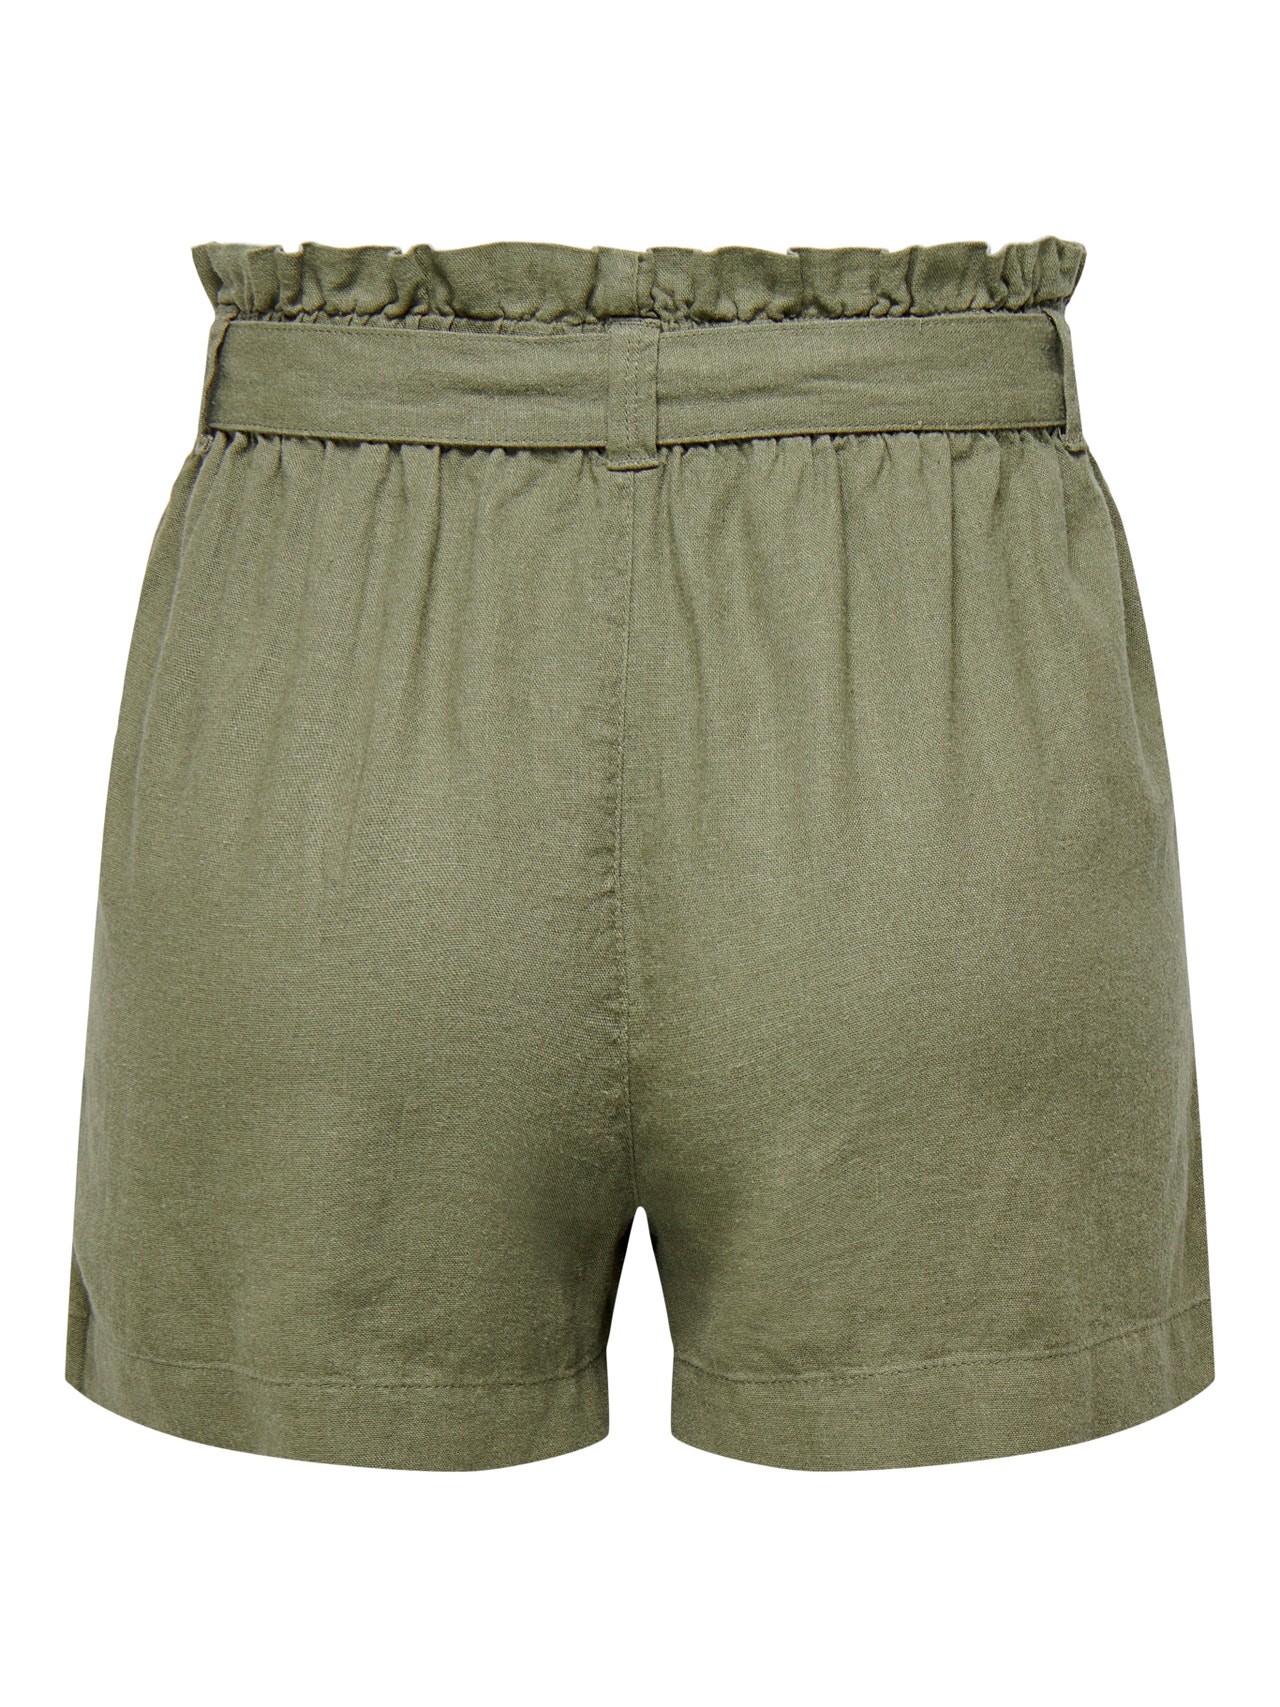 QNIHDRIZ Cotton Linen Shorts for Men Belt Loops Drawstring Shorts